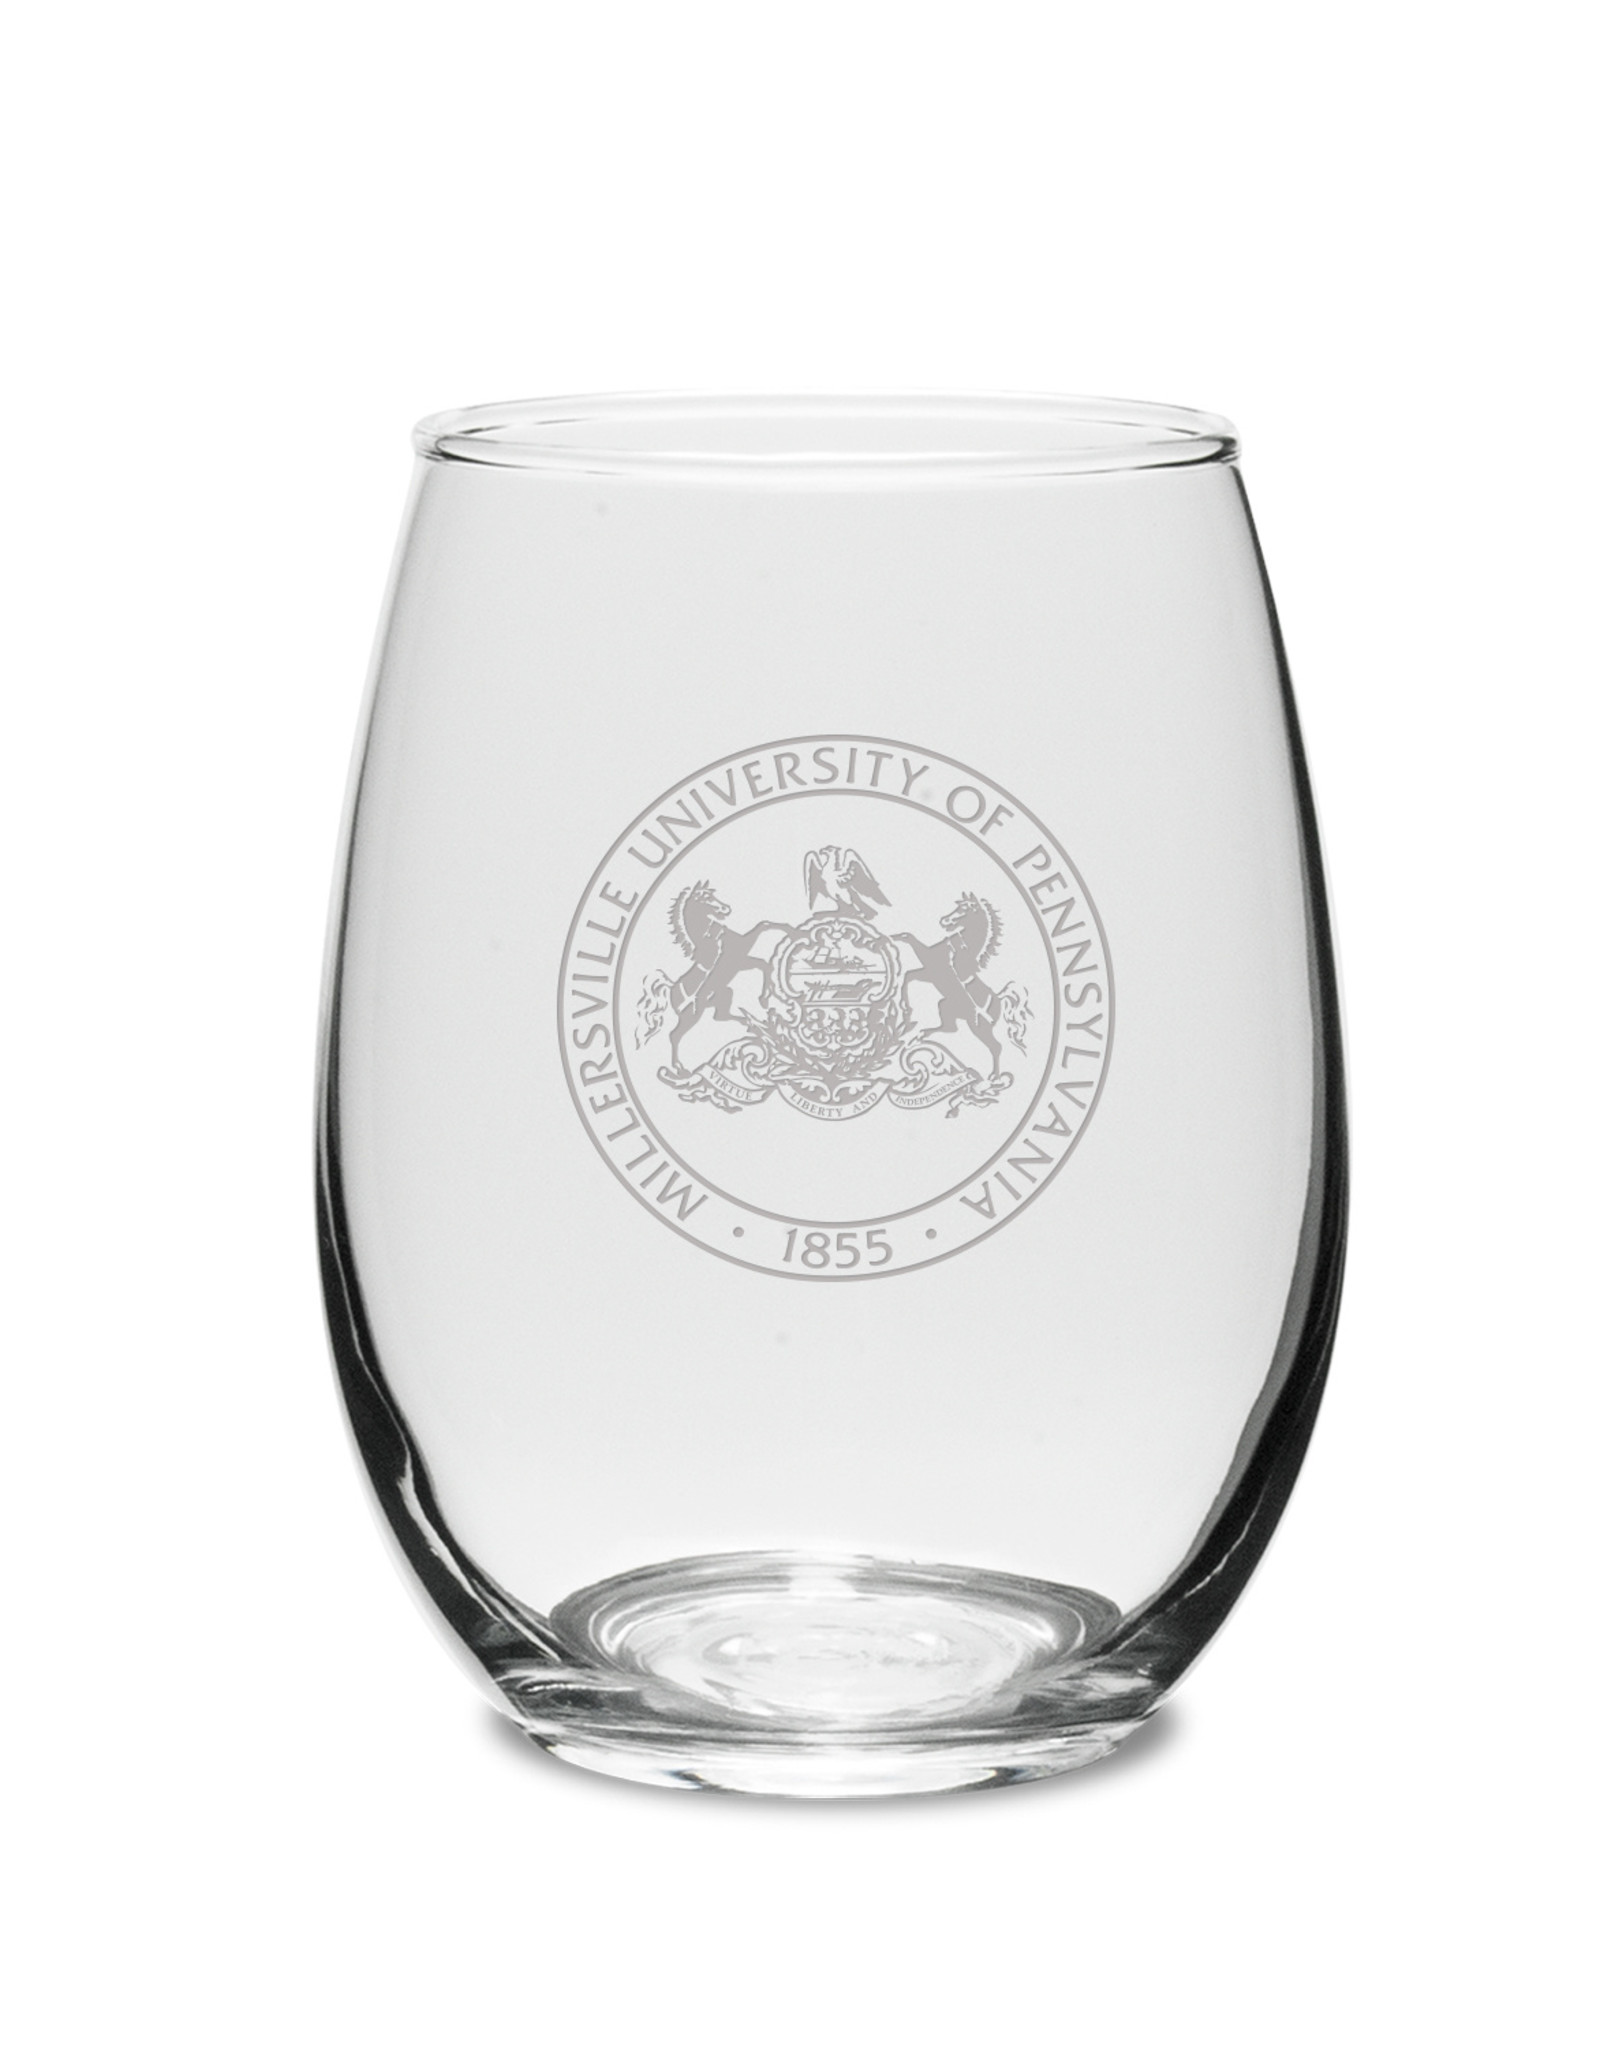 MU Seal Stemless Wine Glass